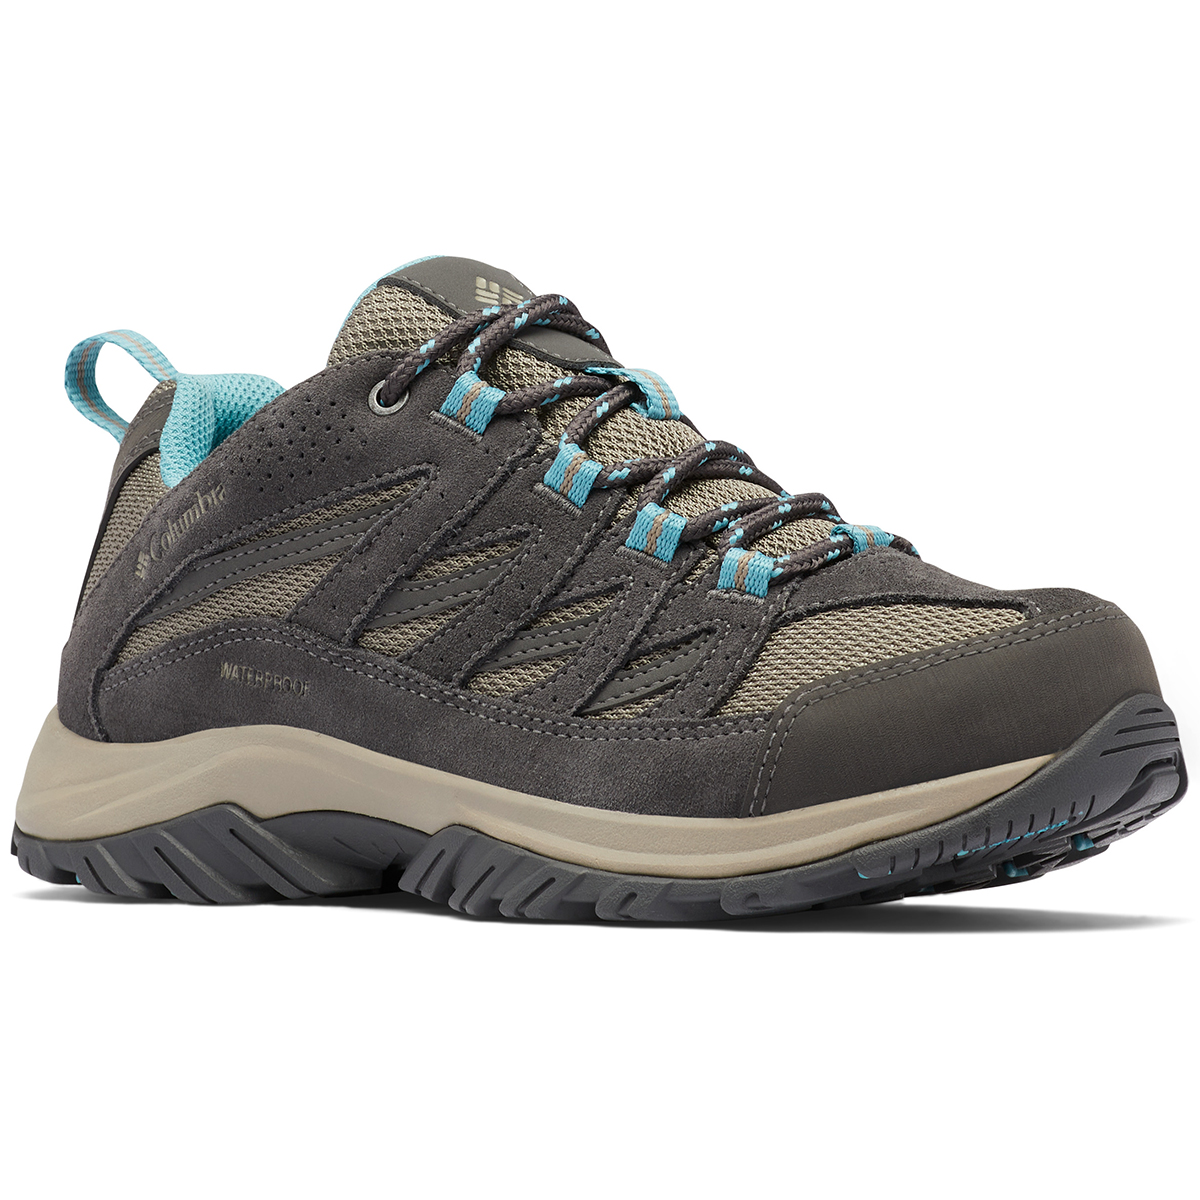 Columbia Women's Crestwood Waterproof Hiking Shoes - Size 9